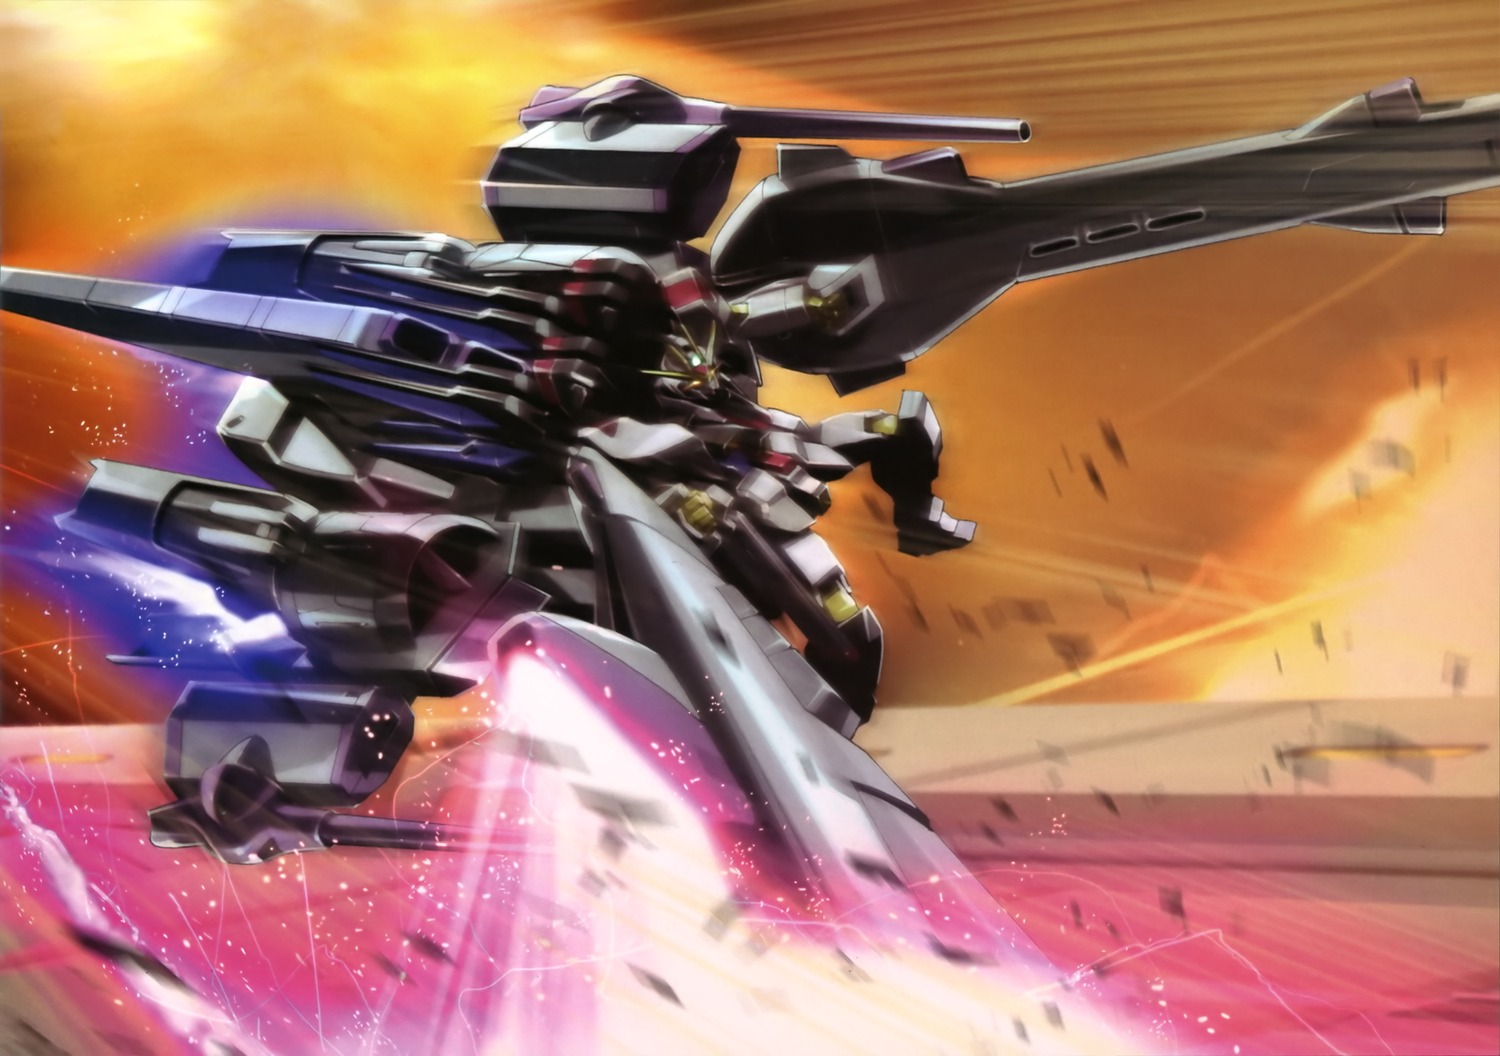 Gundam Walls and LOLS: Freedom Wallpaper